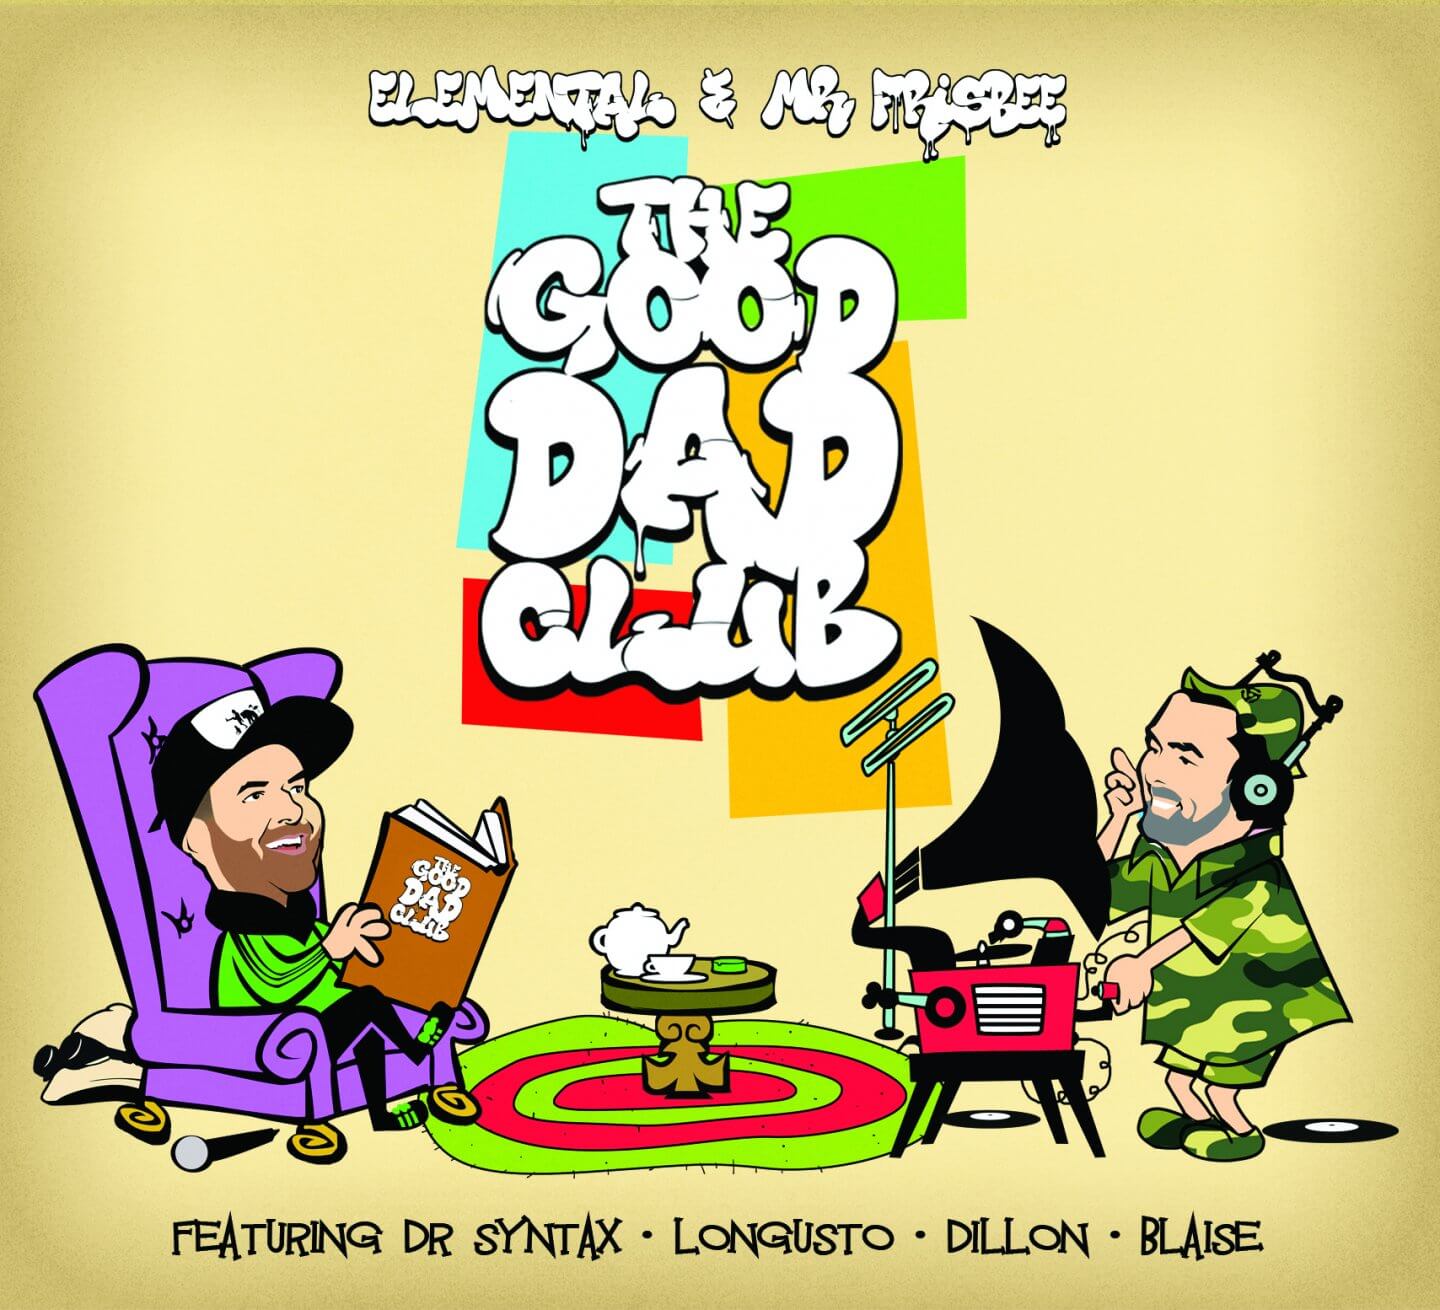 The Good Dad Club CD cover by Professor Elemental